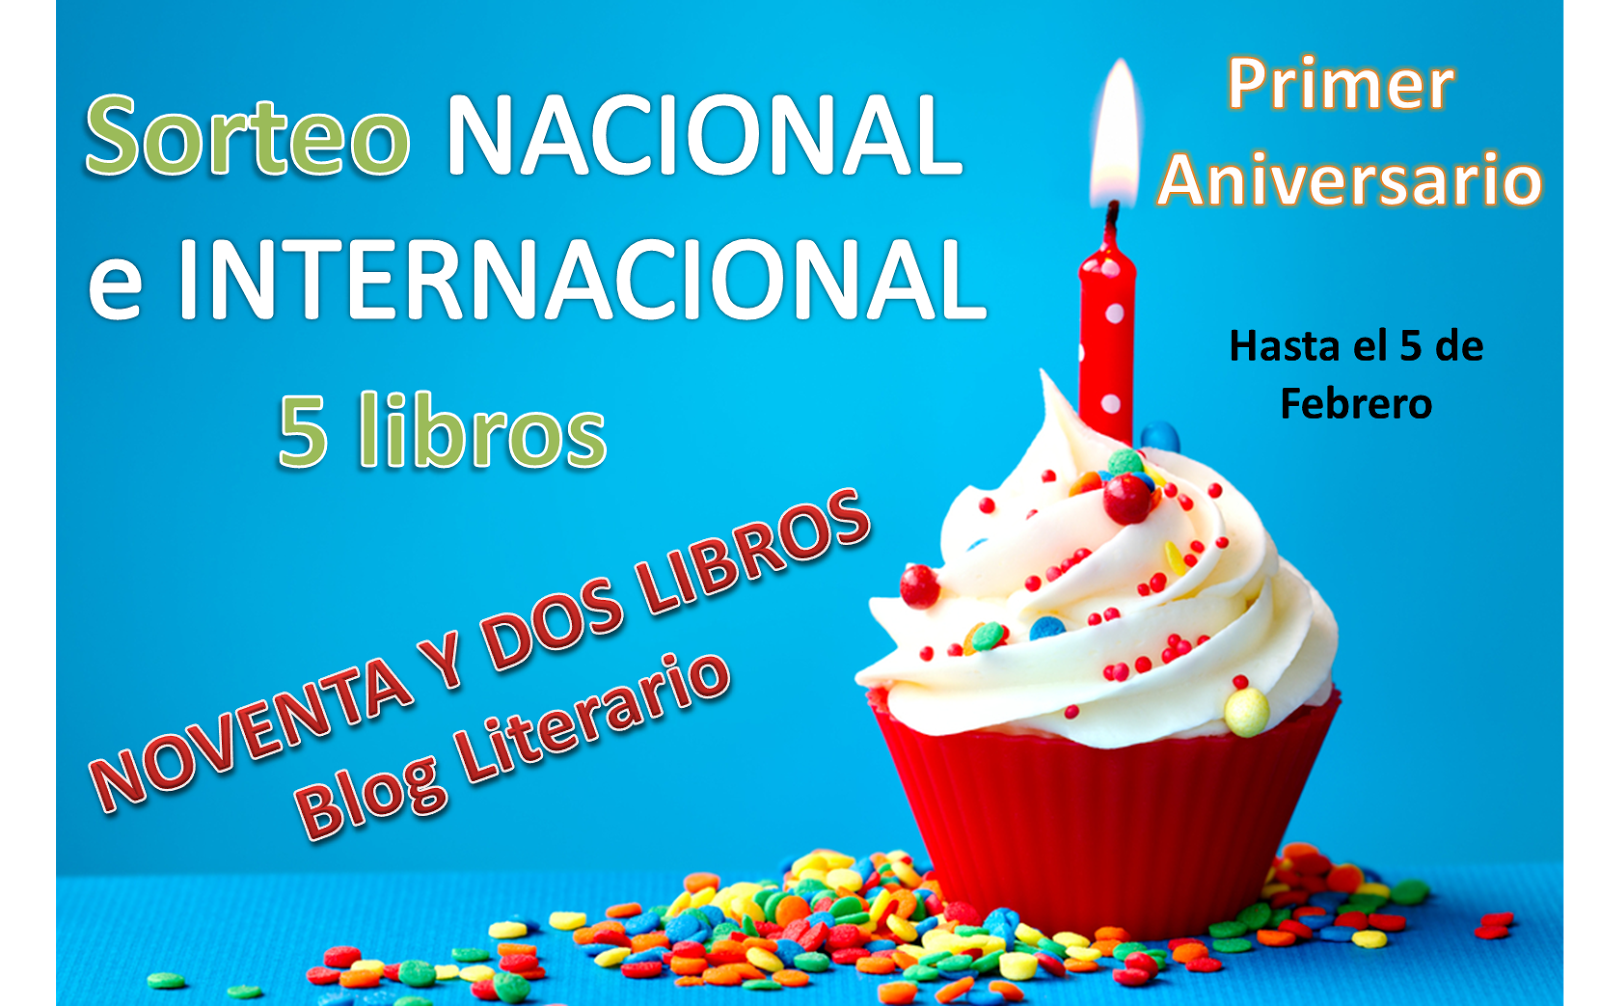 http://noventaydoslibros.blogspot.com.es/2015/01/sorteo-primer-aniversario-premios.html?showComment=1421447138226#c1179993139940440159